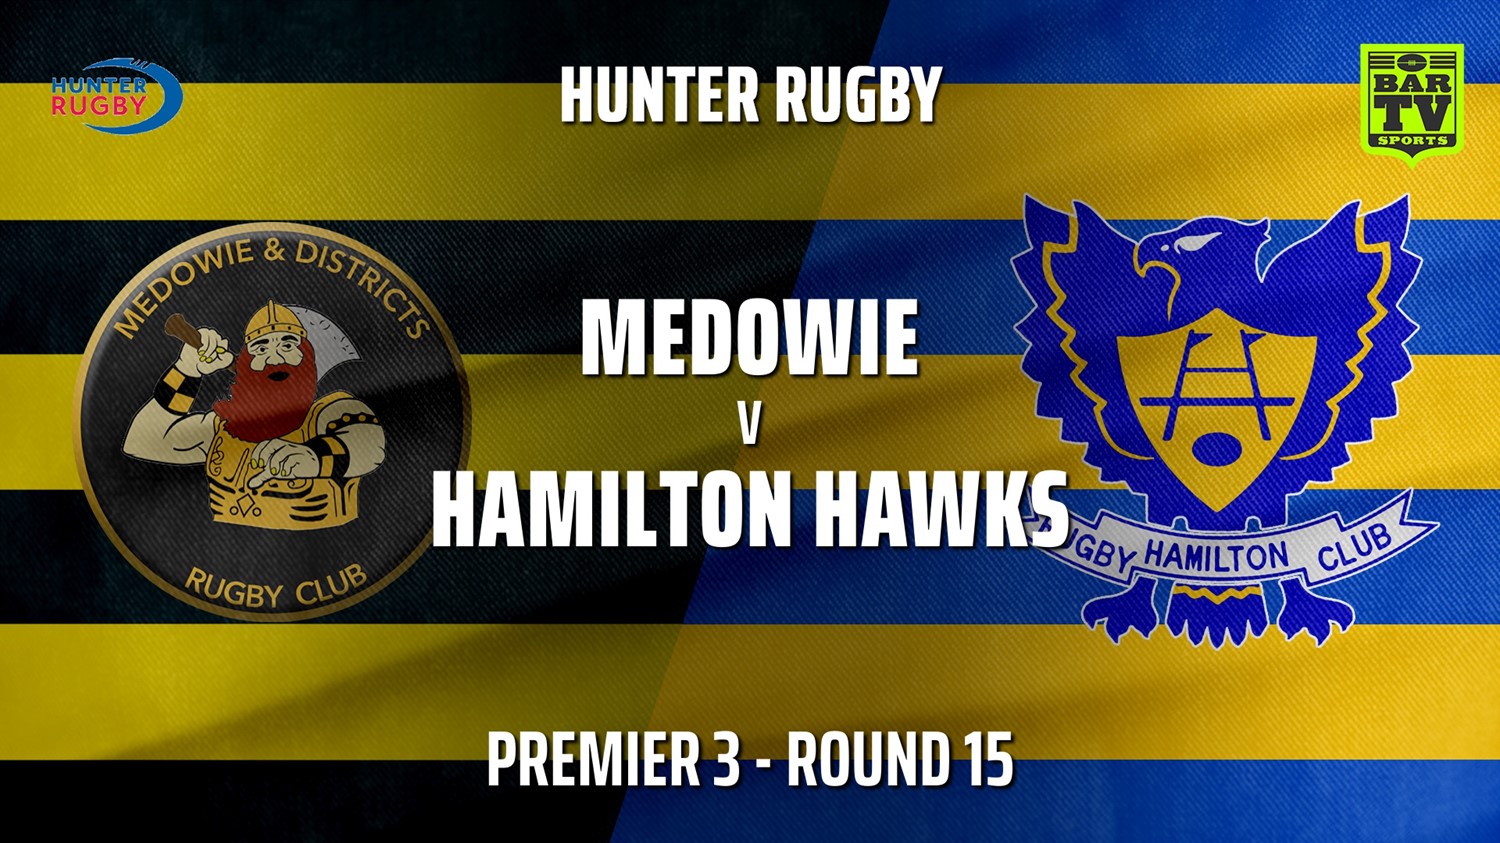 210731-Hunter Rugby Round 15 - Premier 3 - Medowie Marauders v Hamilton Hawks Slate Image